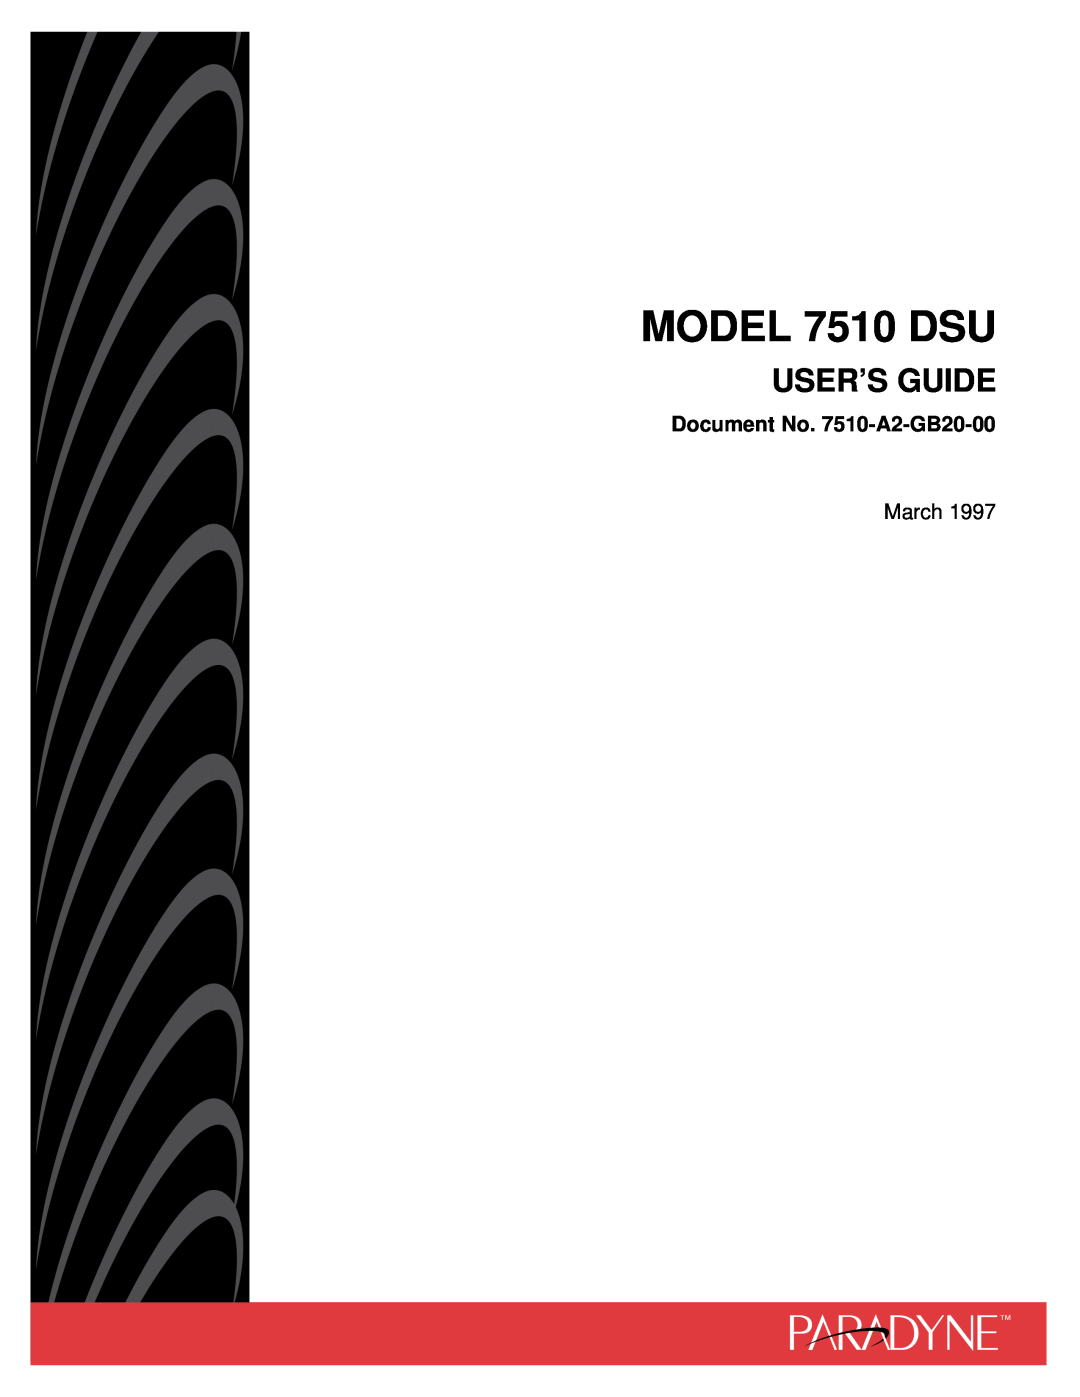 Paradyne 727 manual MODEL 7510 DSU, Users Guide, Document No. 7510-A2-GB20-00, March 